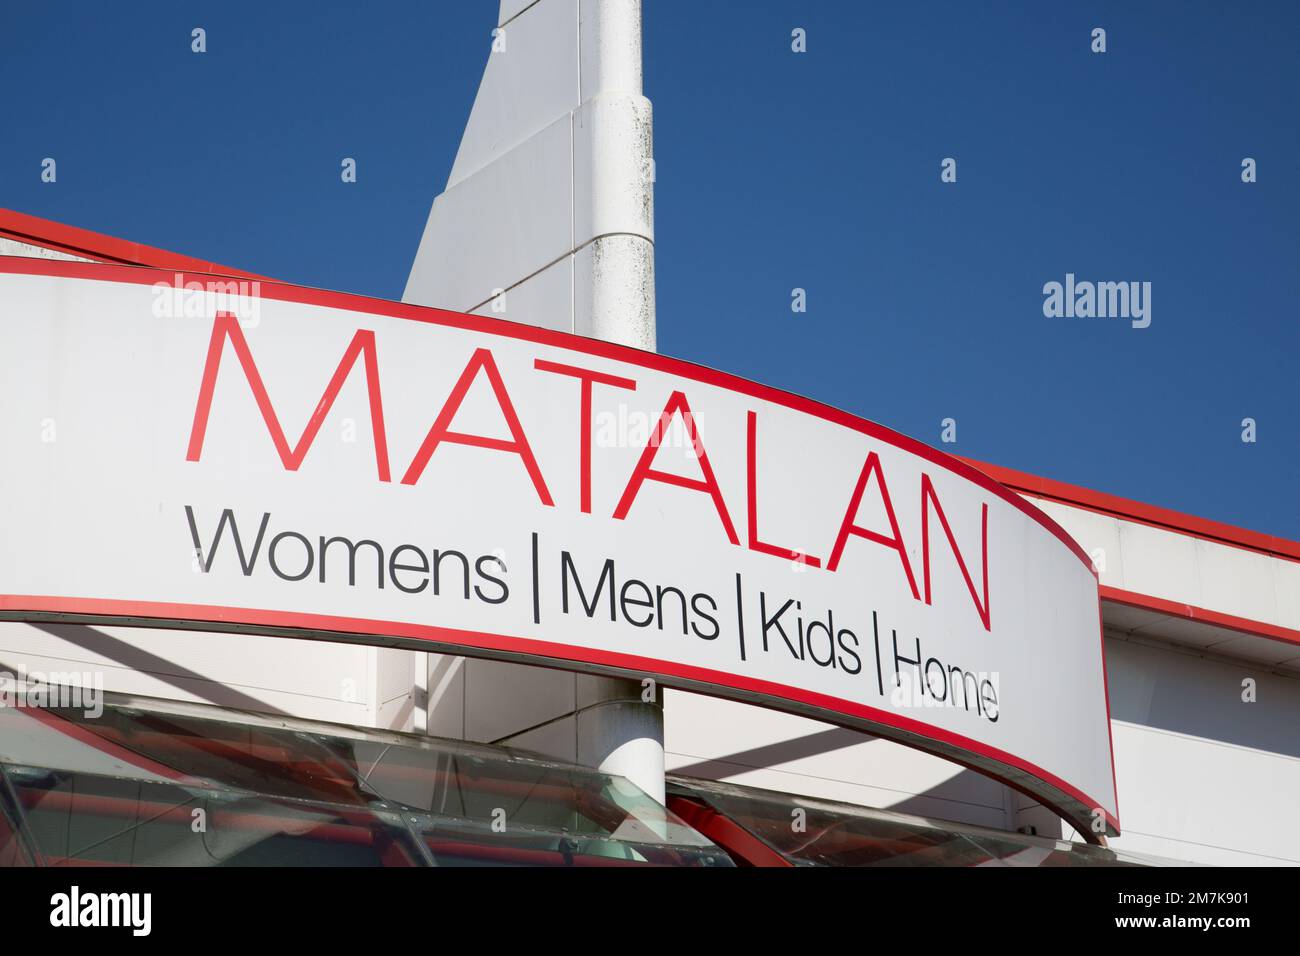 Matalan store entrance Stock Photo